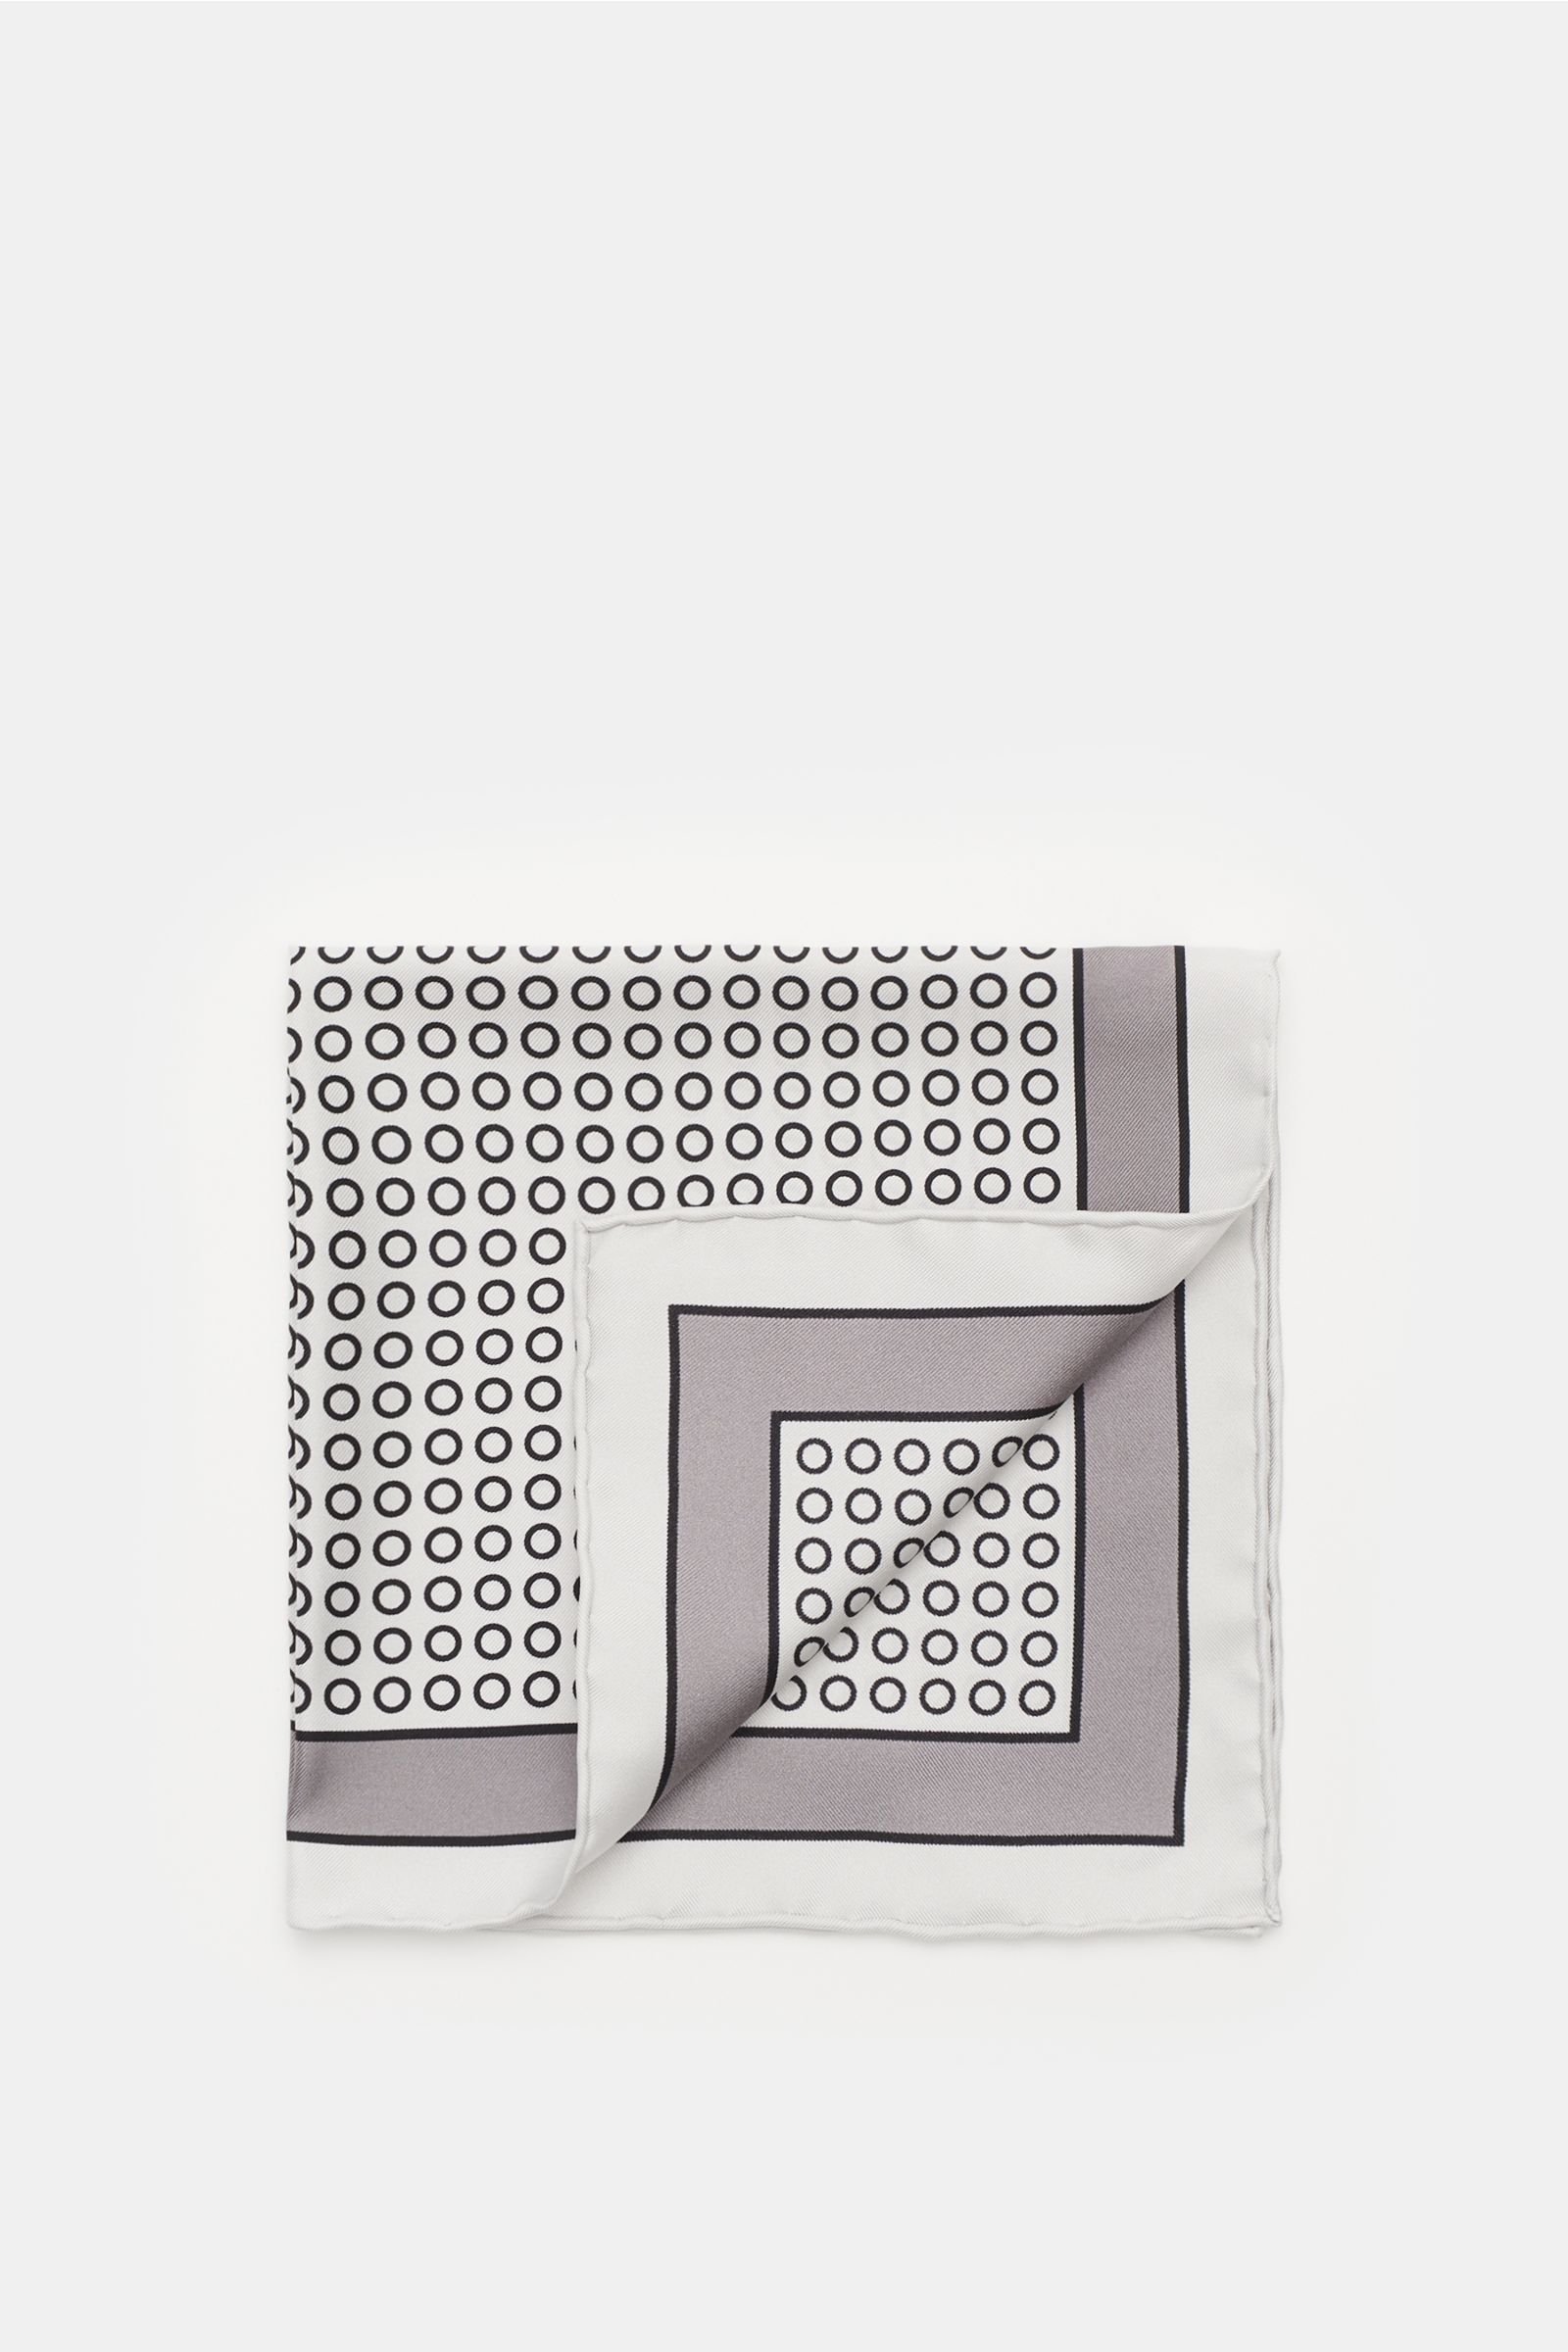 Pocket square light grey/grey with polka dots